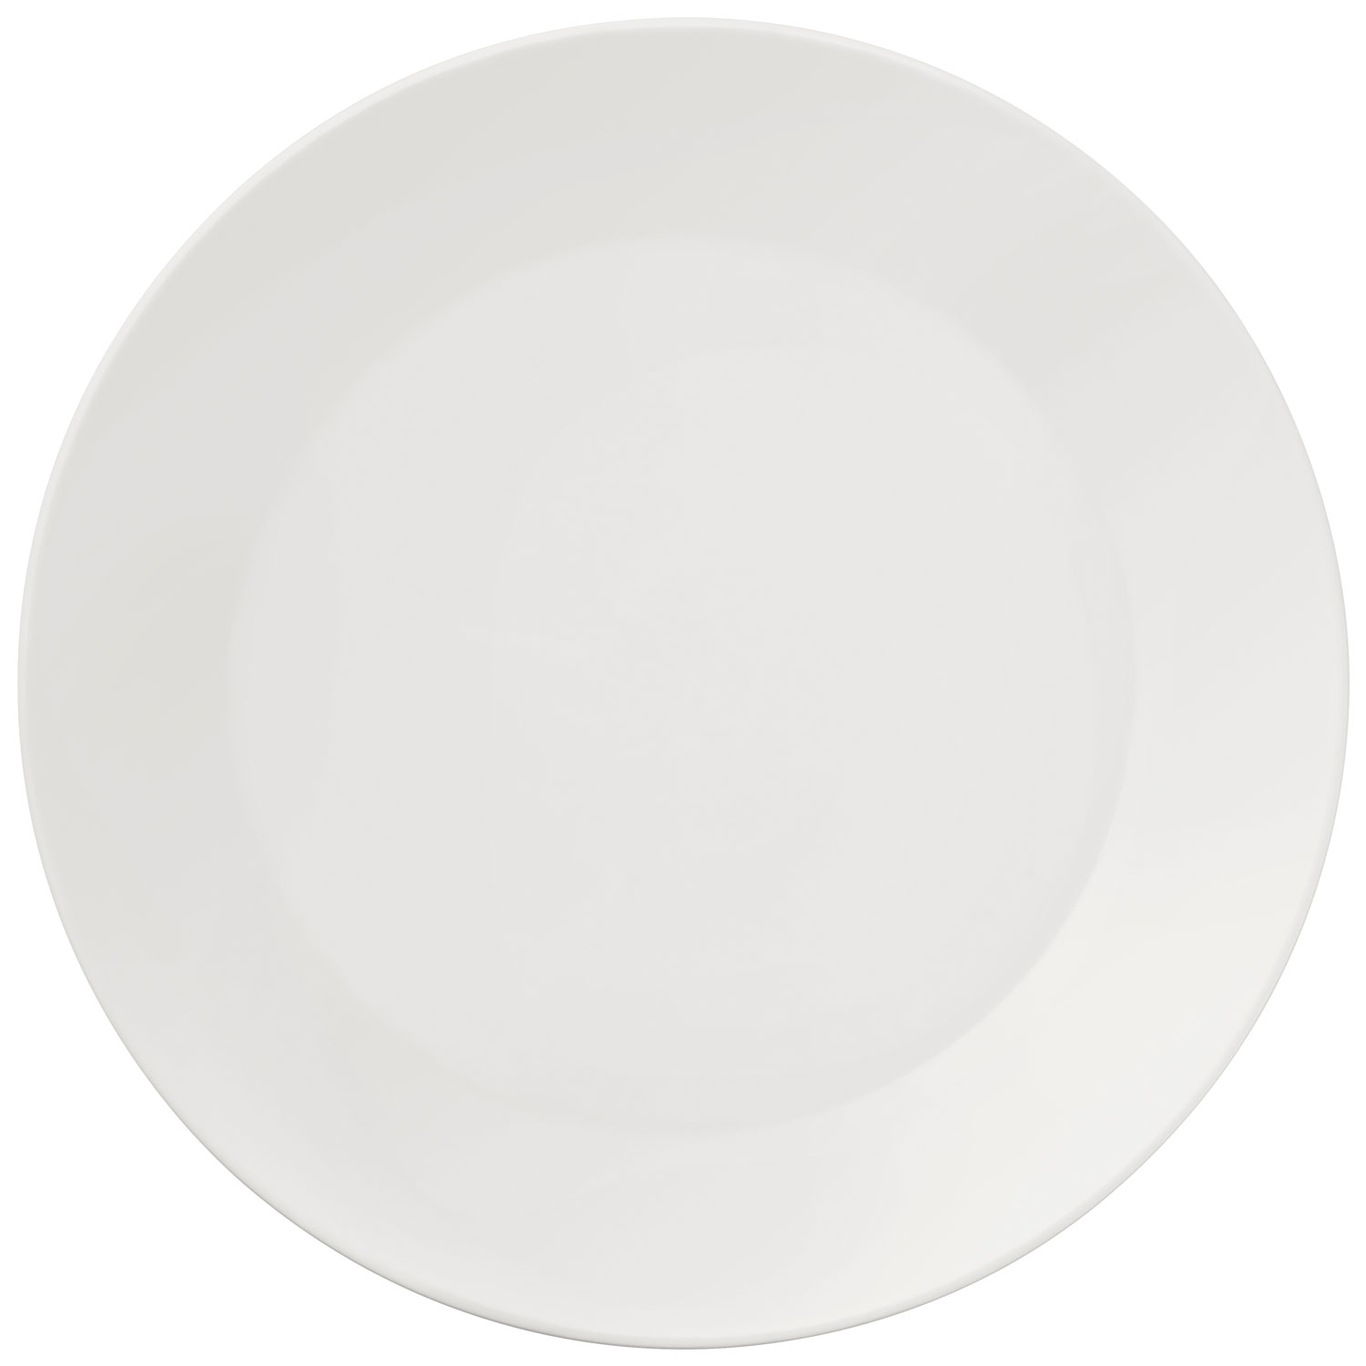 Mainio Side Plate White, 19 cm